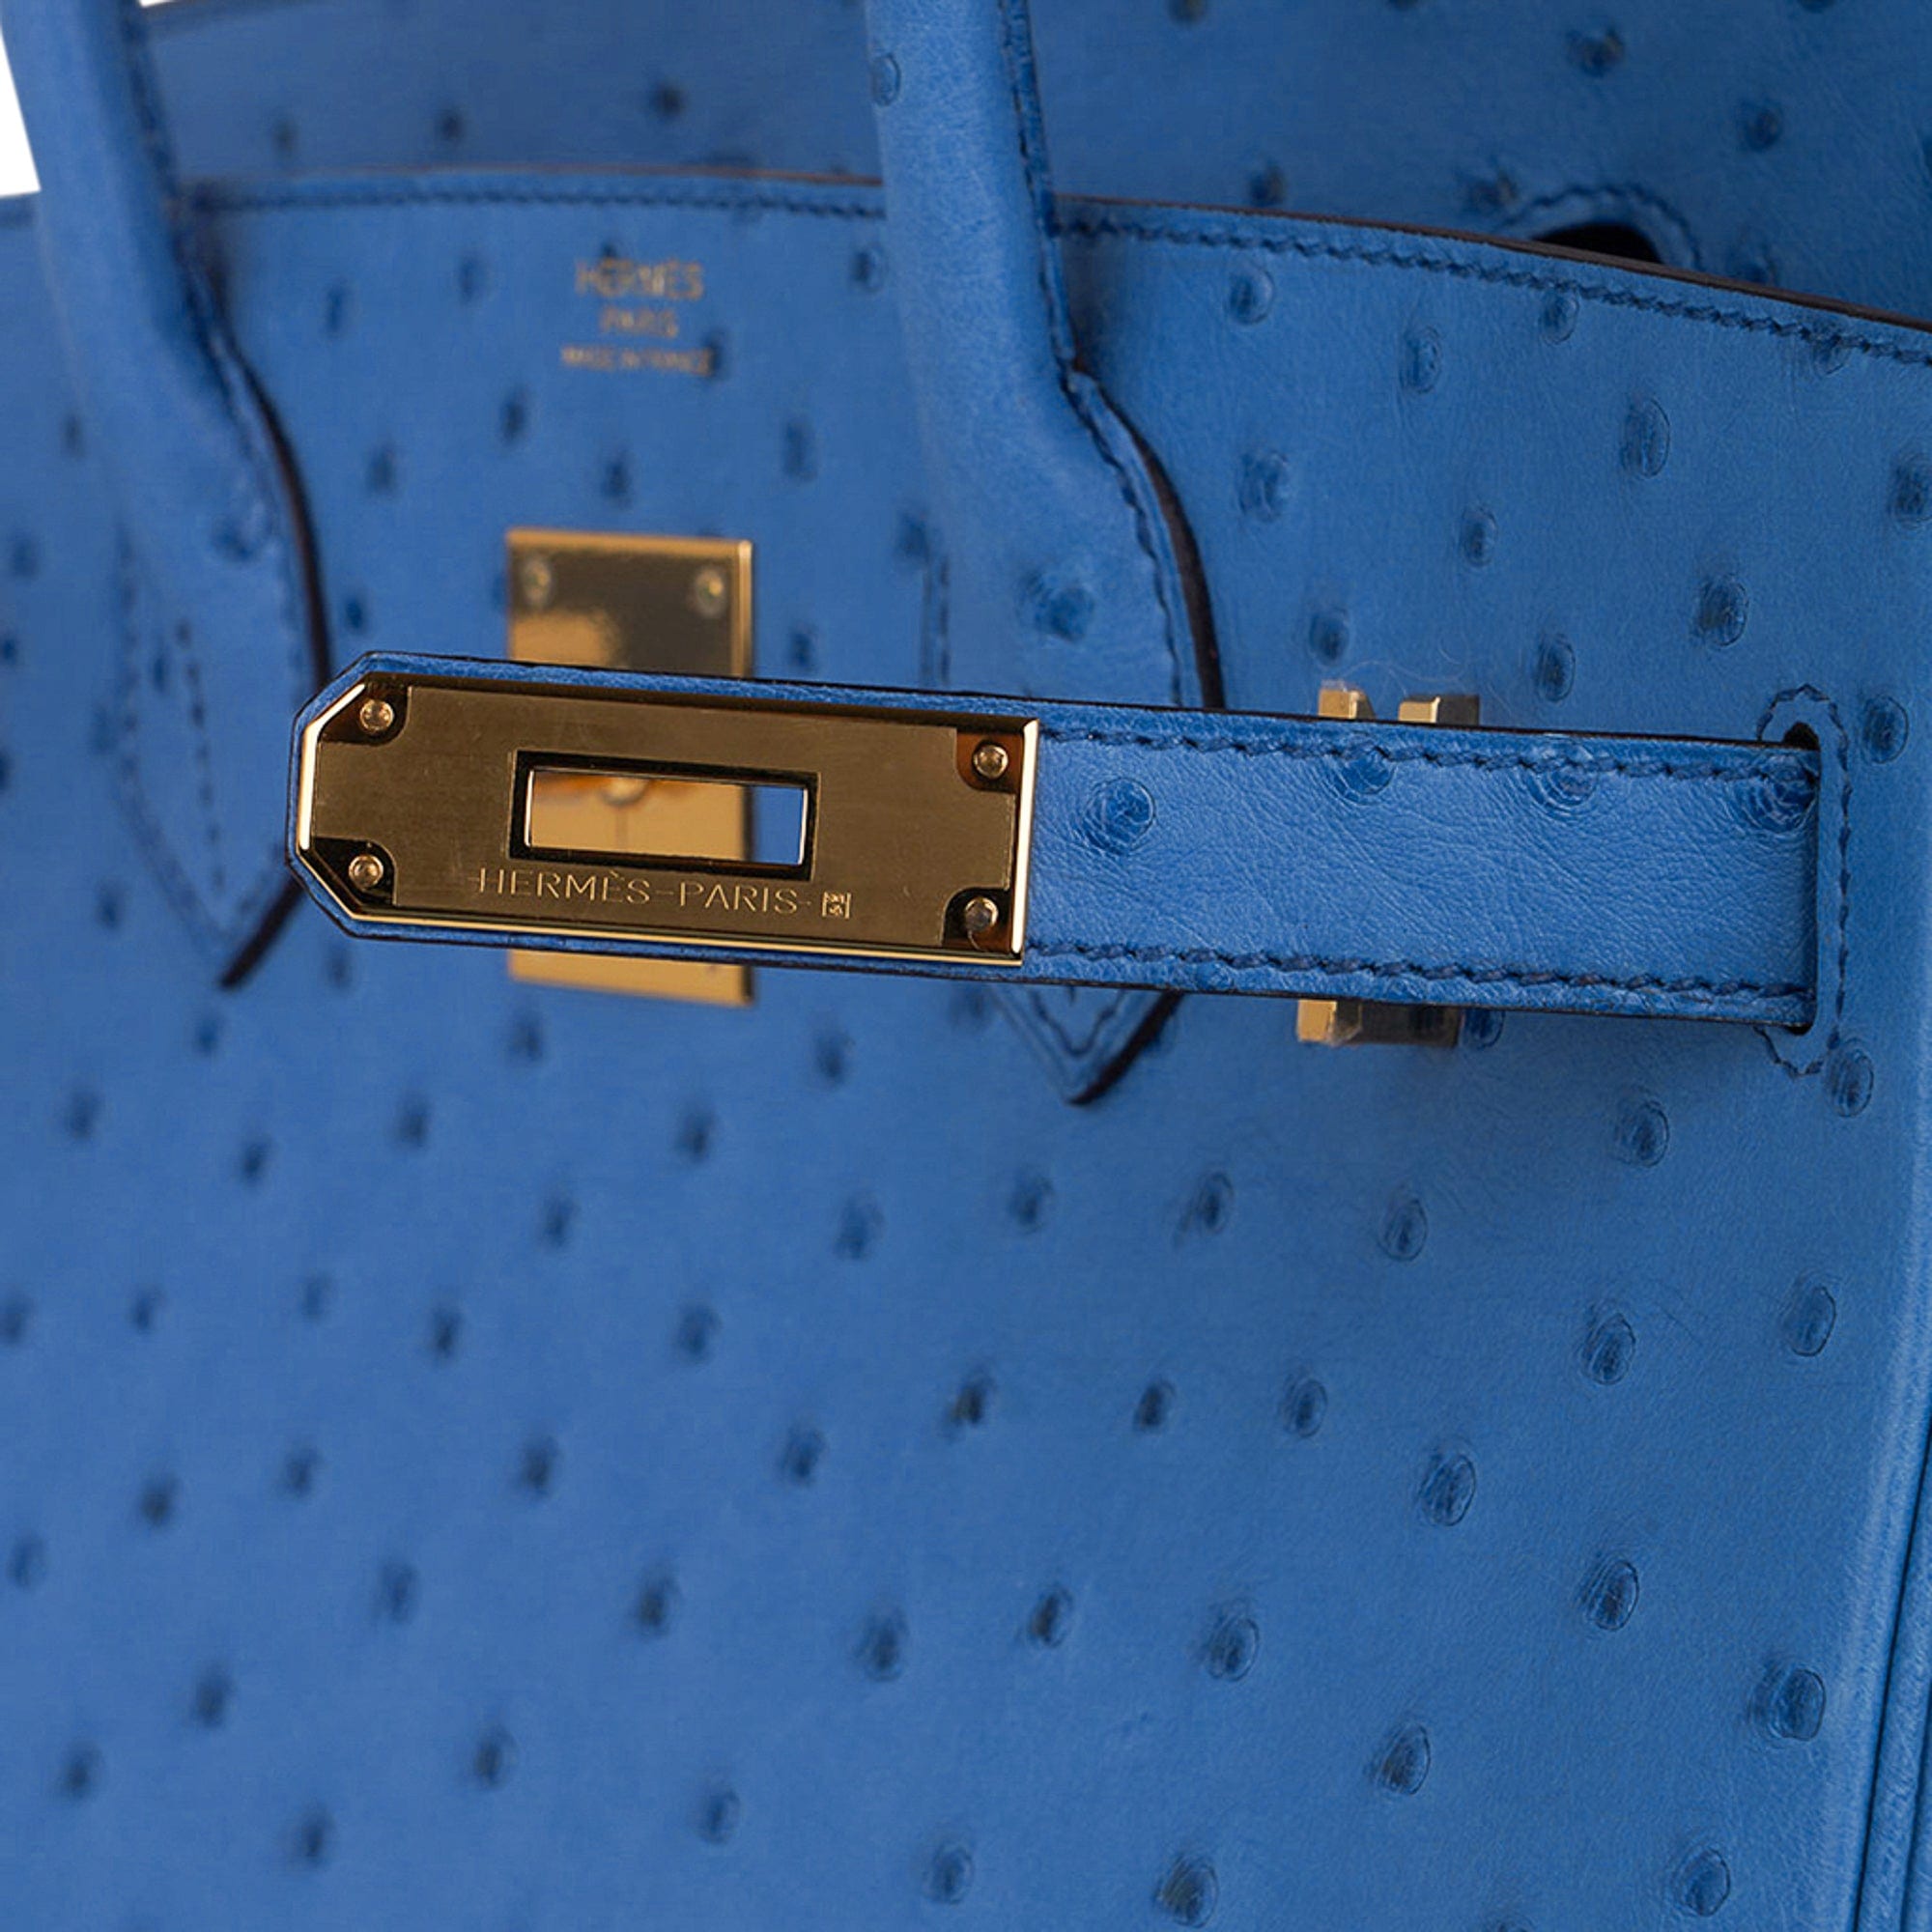 A Hermes Birkin 30 Blue Mykonos Ostrich Leather Bag